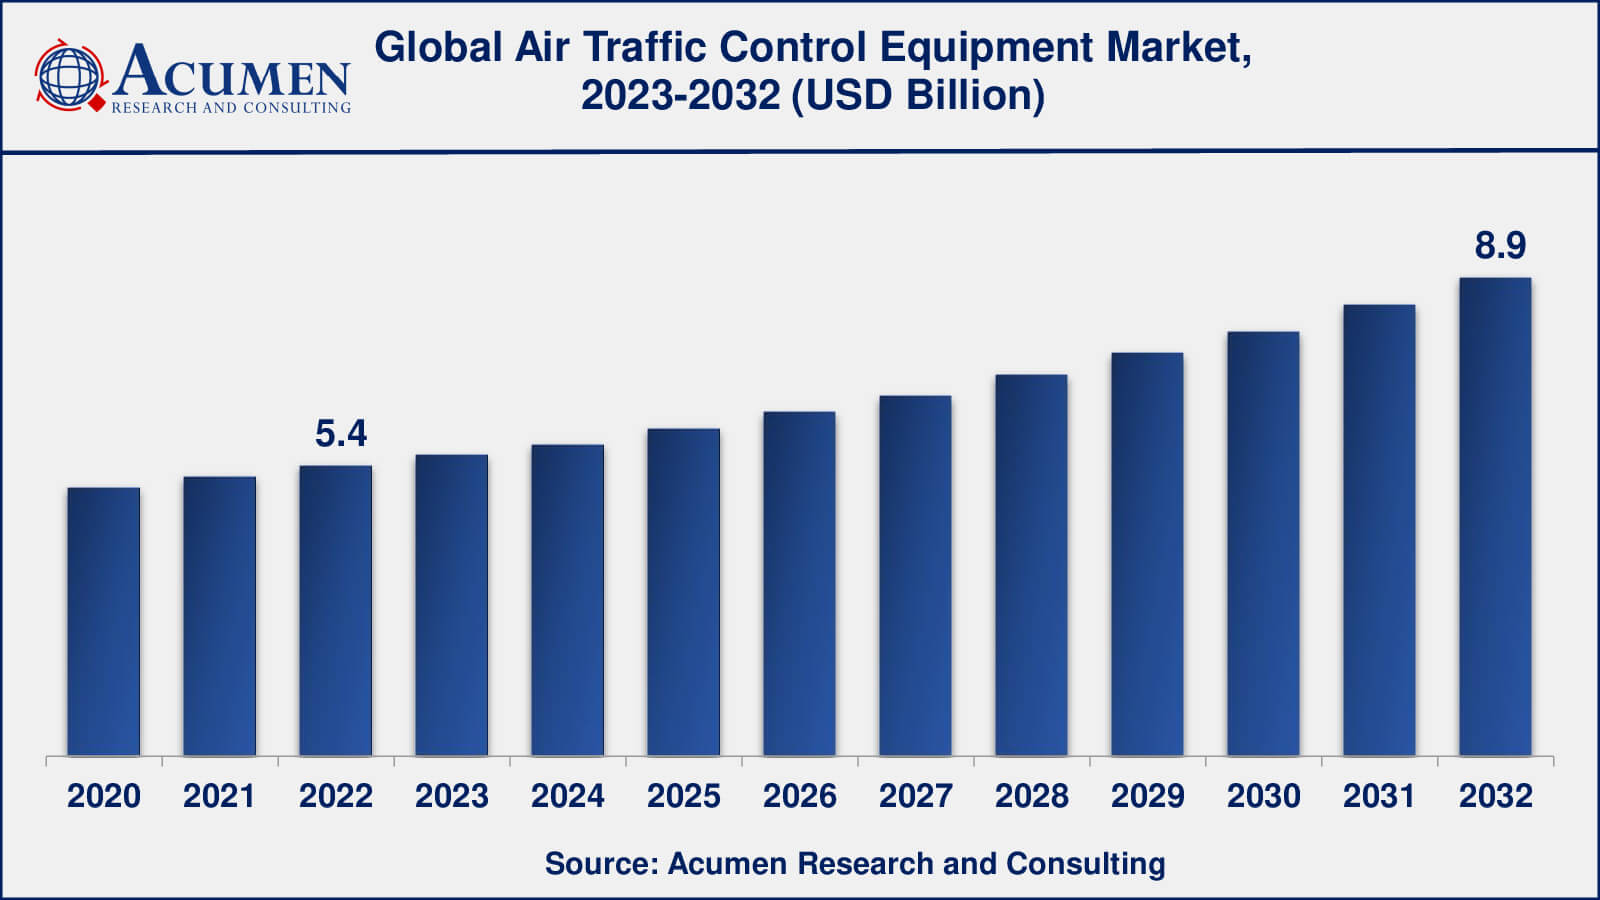 Global Air Traffic Control Equipment Market Dynamics